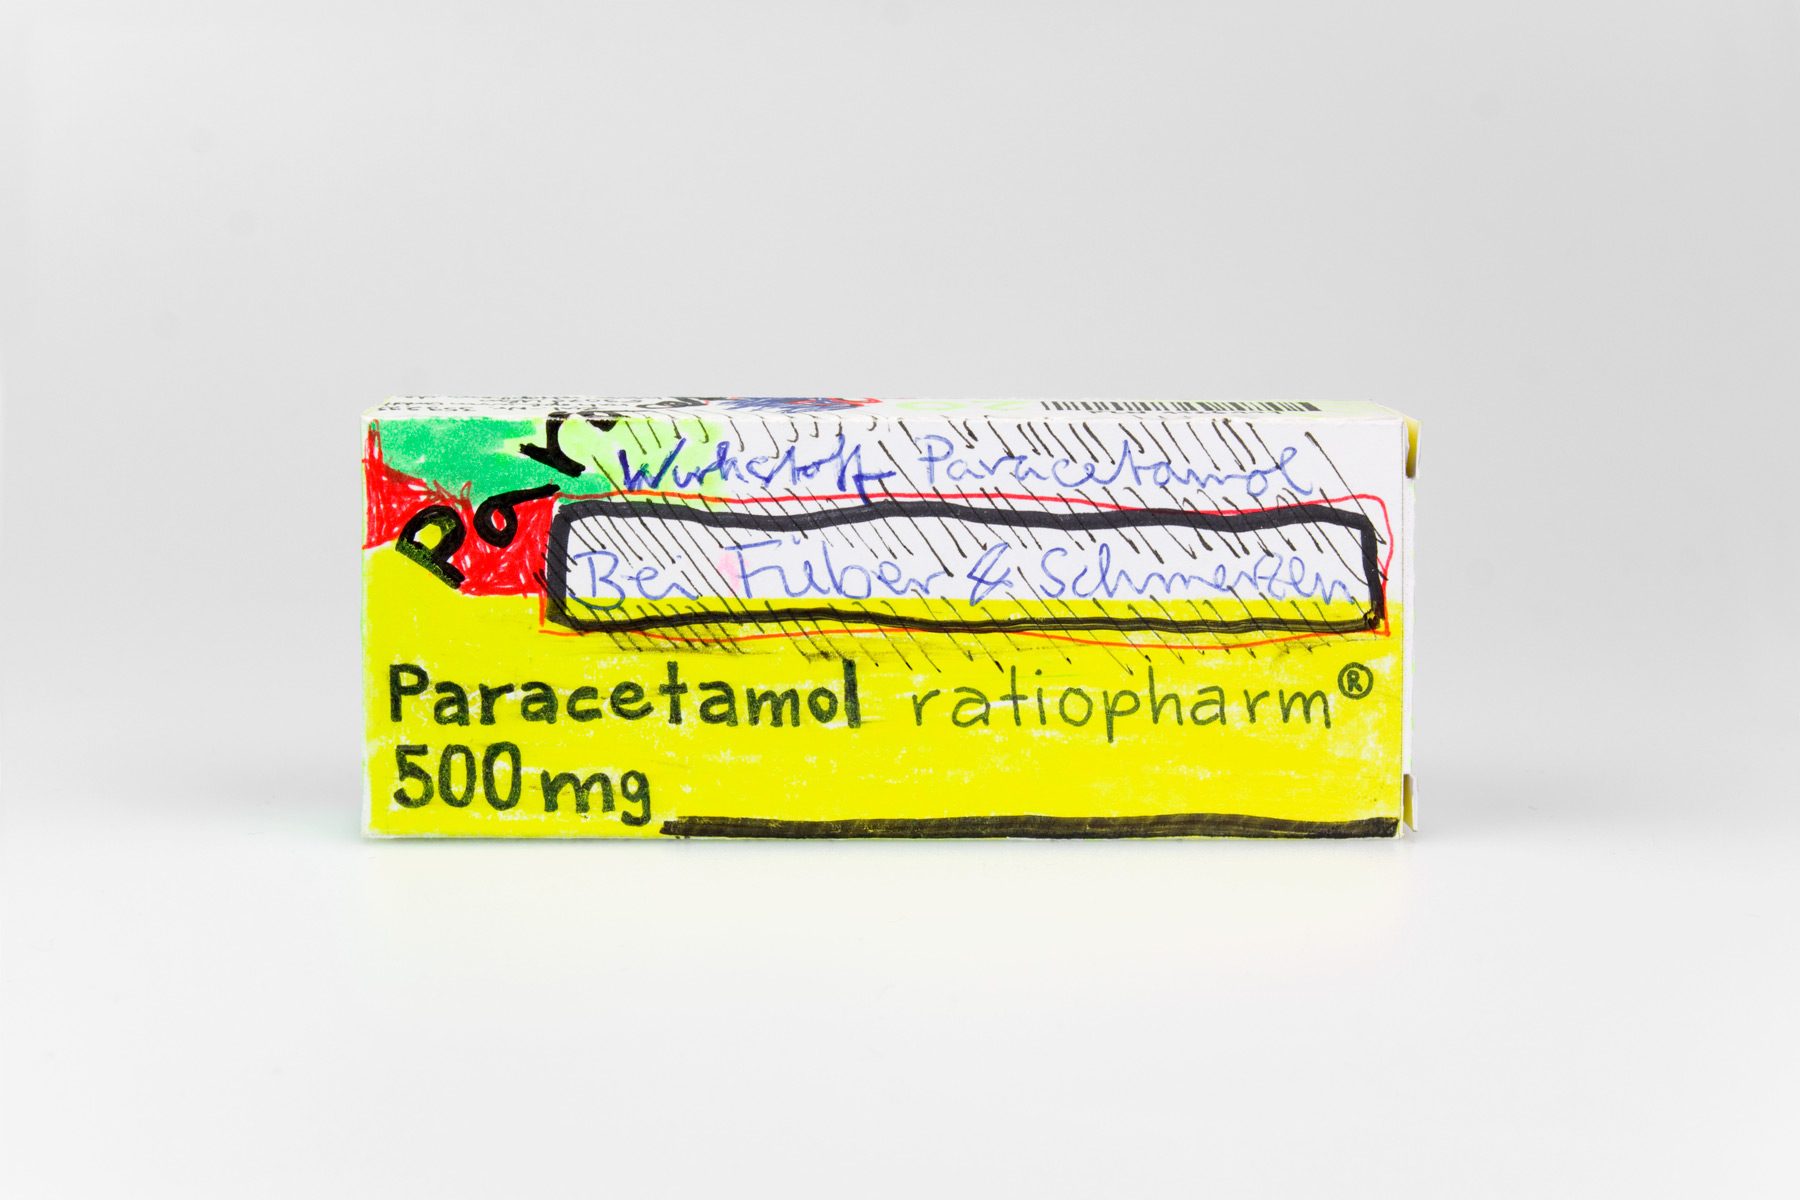 Paracetamol-ratiopharm® 500 mg, Packaging design, David Fischbach